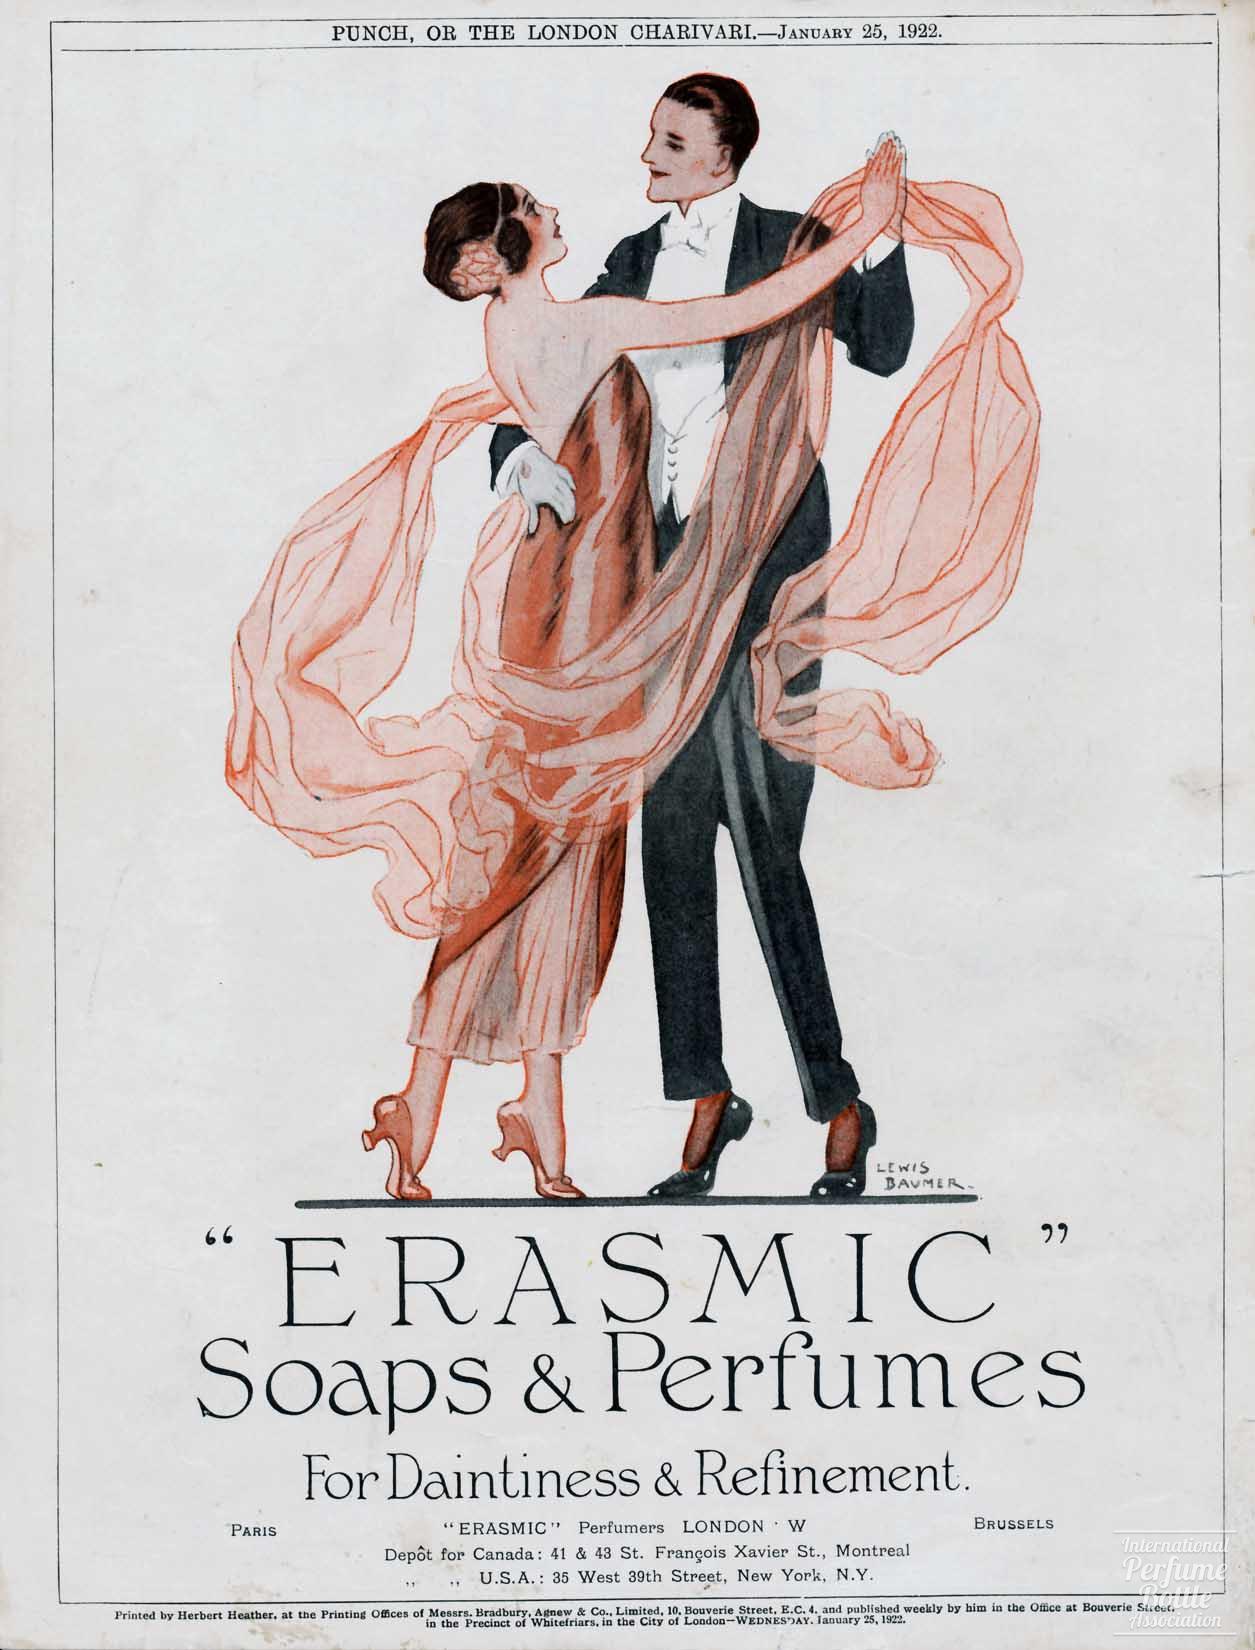 Erasmic Soaps and Perfumes Ad - 1922